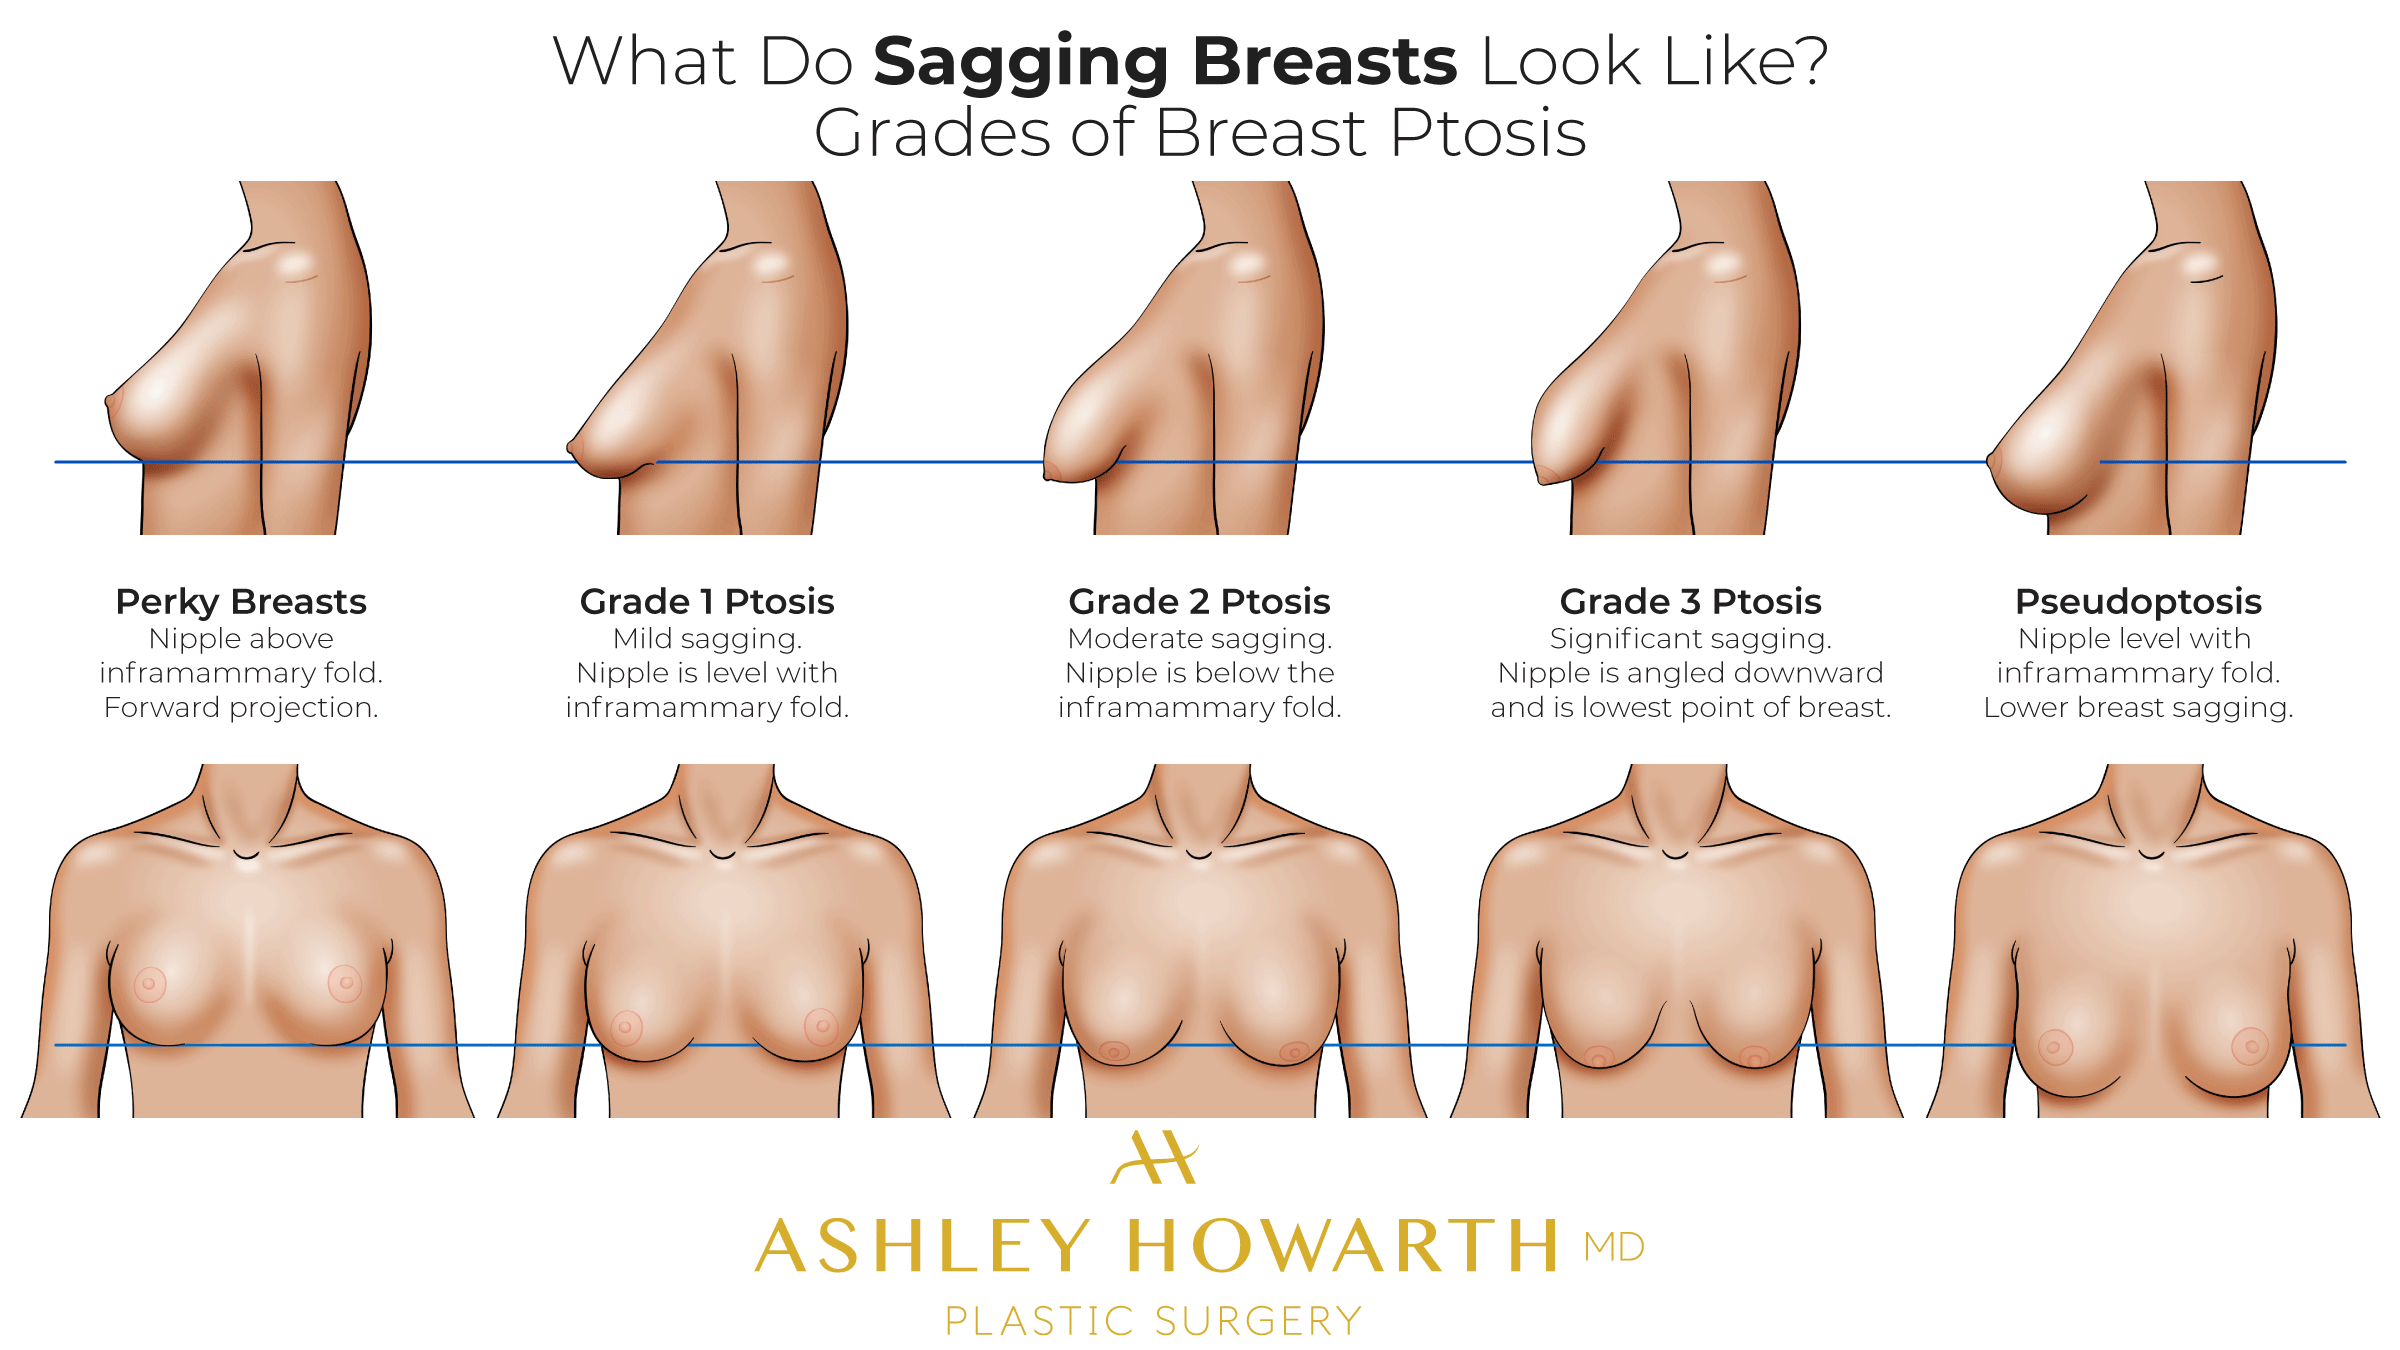 dhruba rai recommends nipple piercing saggy boobs pic